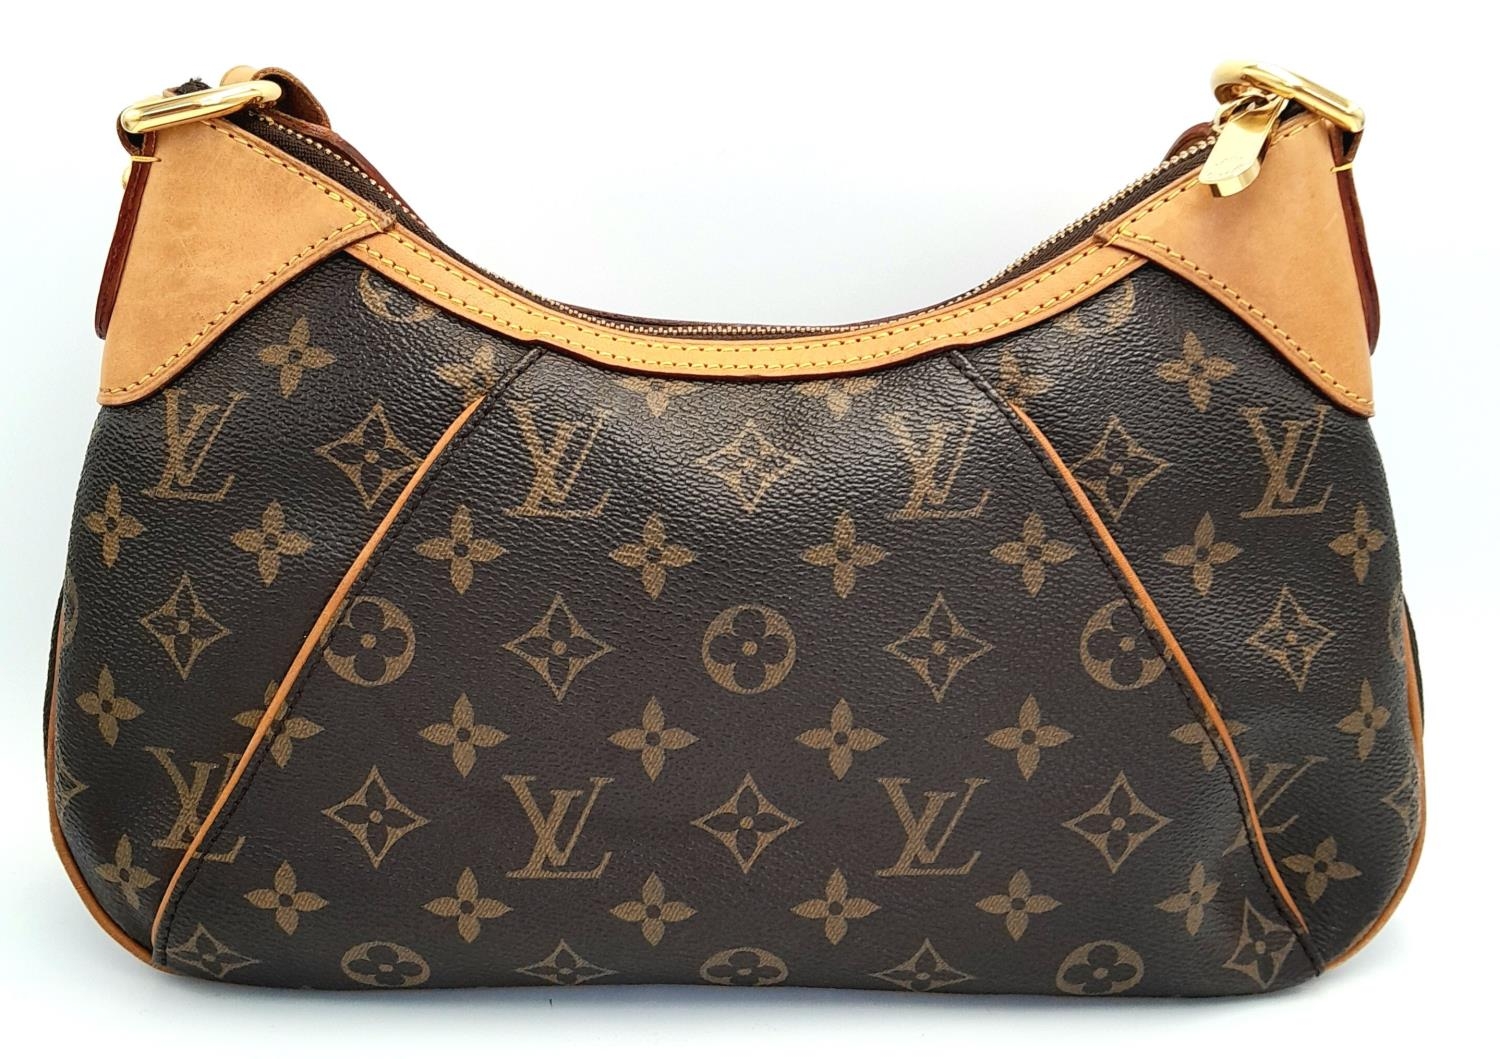 A Louis Vuitton Thames Shoulder Bag. Monogramed canvas exterior with gold-toned hardware, adjustable - Image 2 of 9